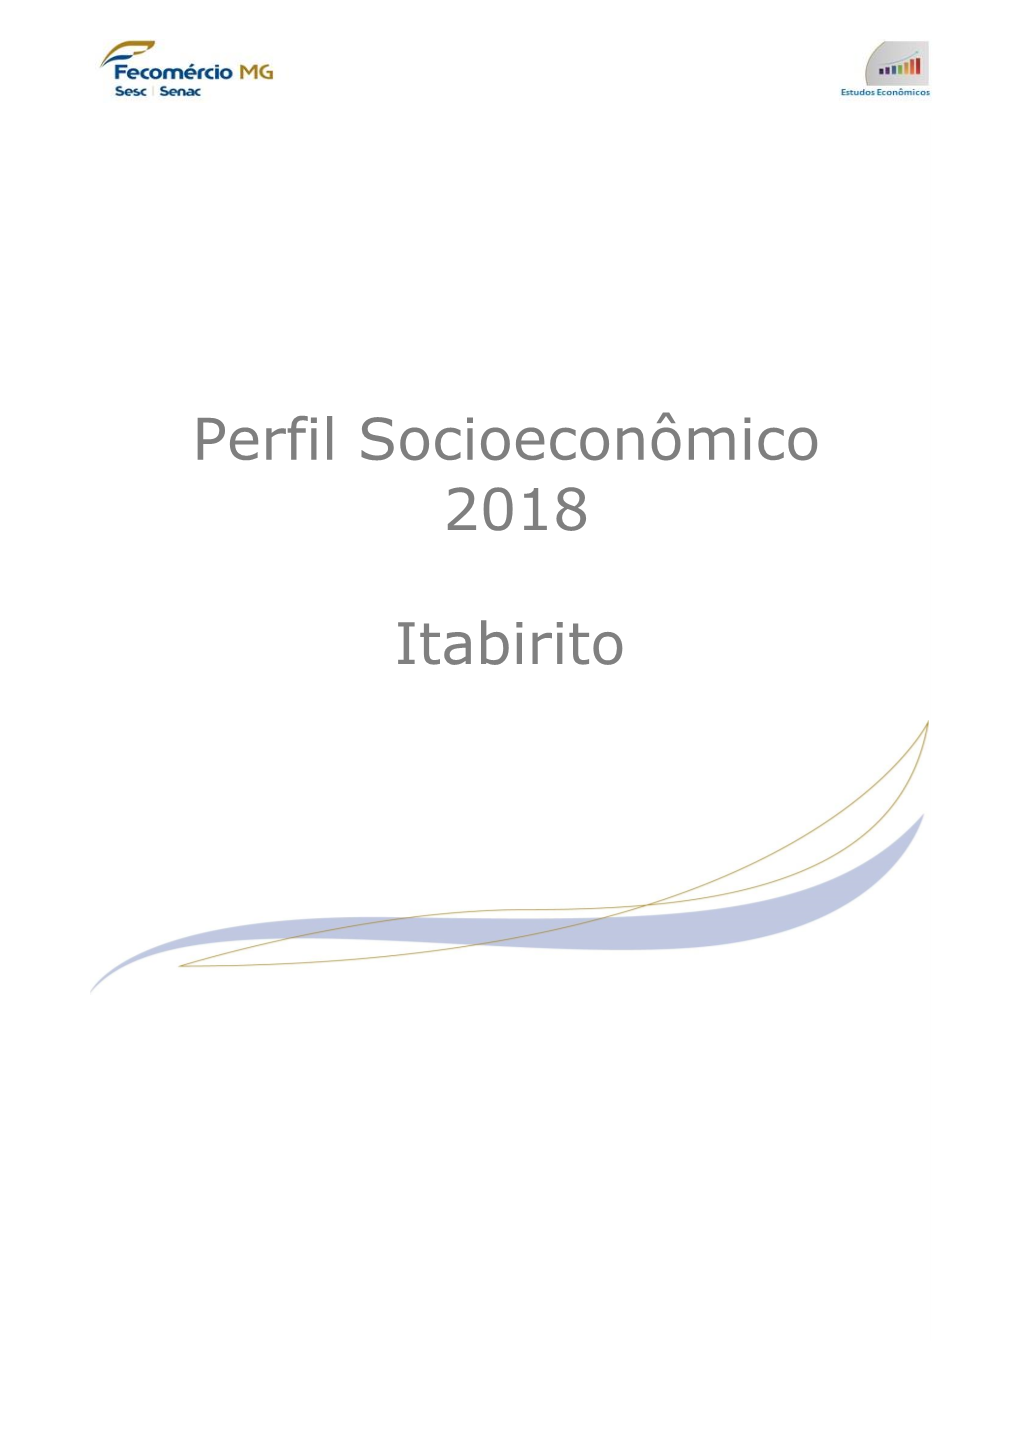 Itabirito Perfil Socioeconômico 2018